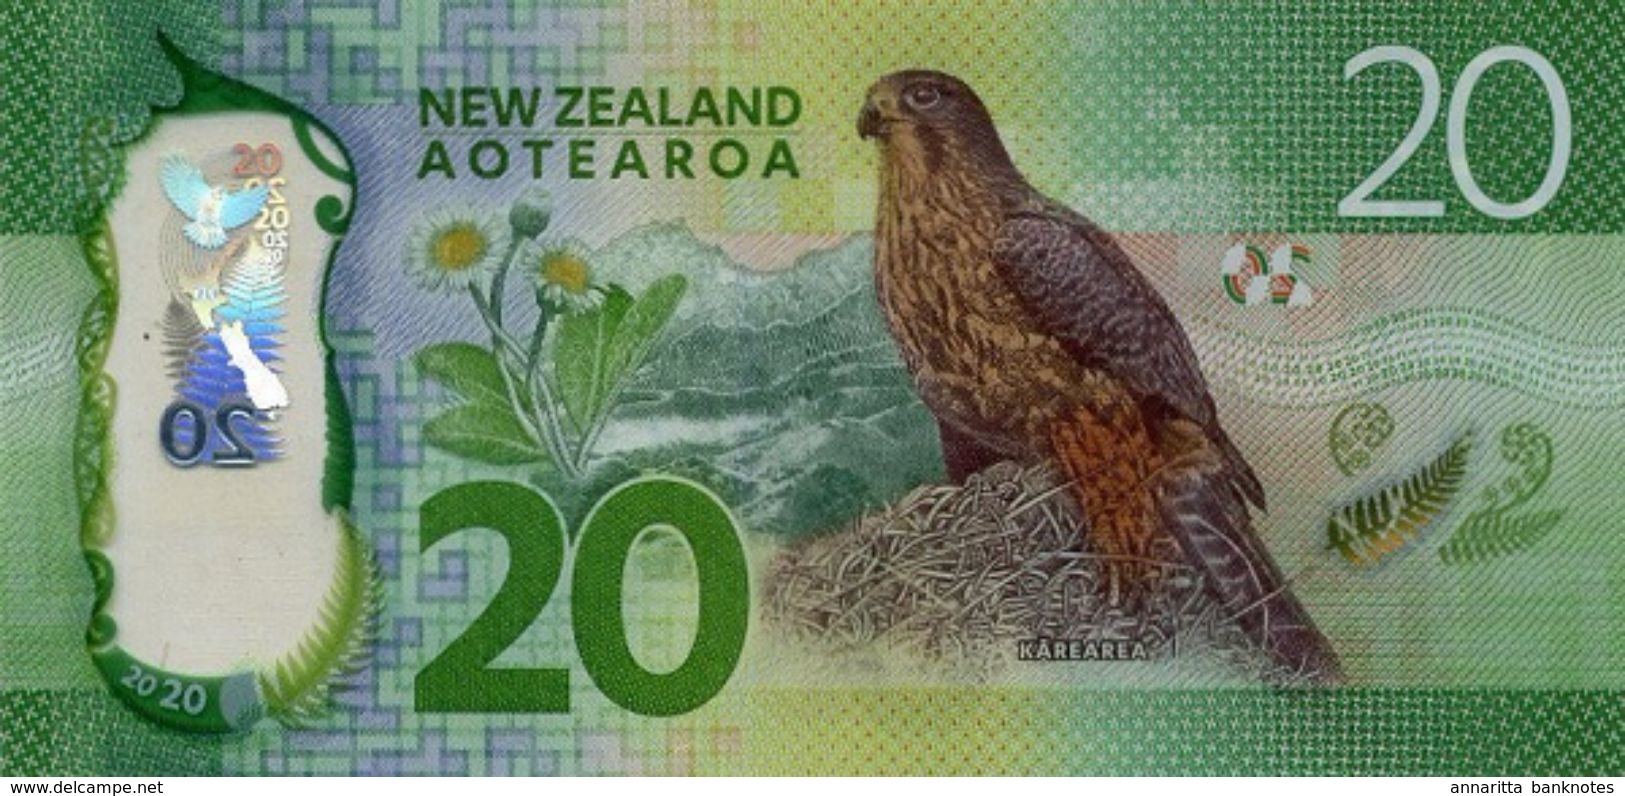 NEW ZEALAND 20 DOLLARS ND (2016) P-193a UNC [NZ139a] - Nueva Zelandía